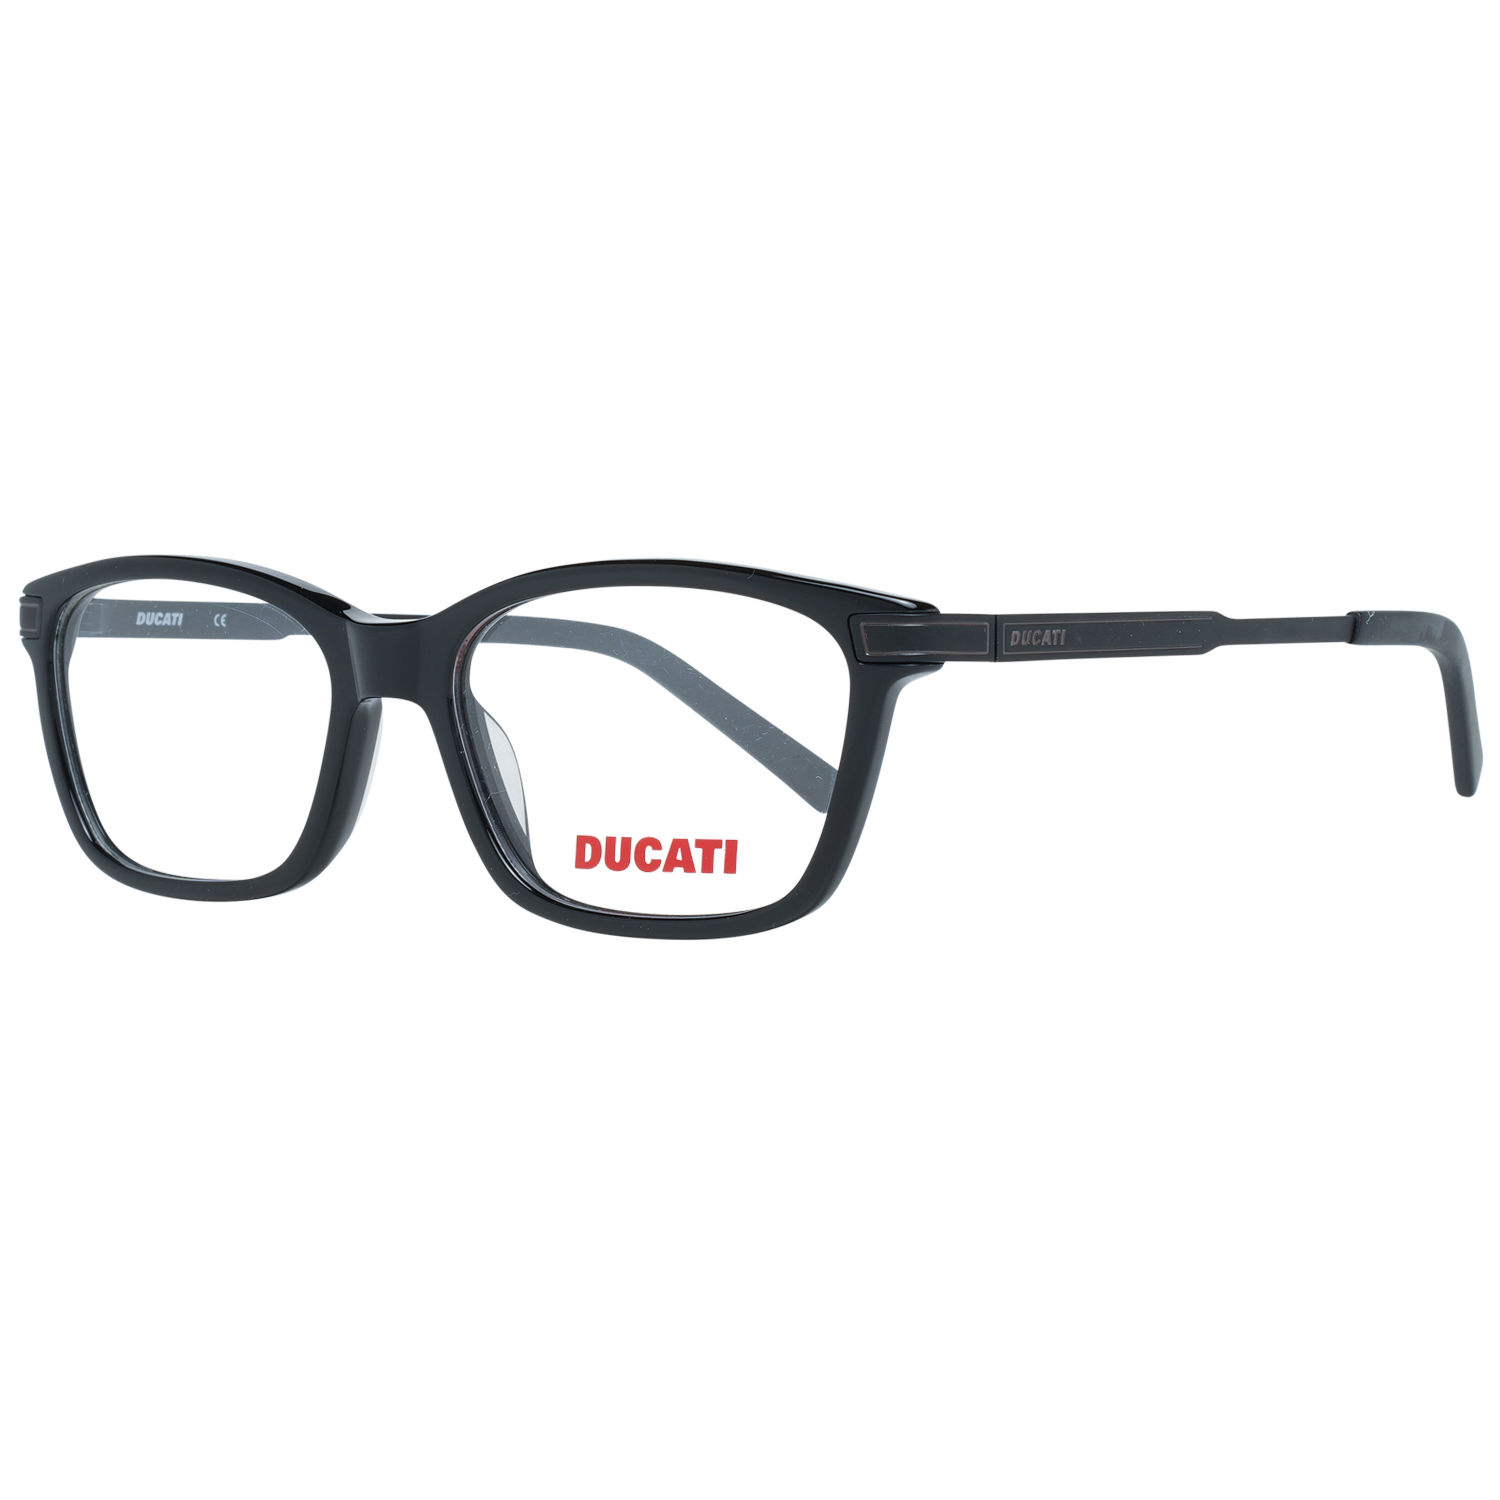 Ducati Frames Ducati Optical Frame DA1032 001 54 Eyeglasses Eyewear UK USA Australia 